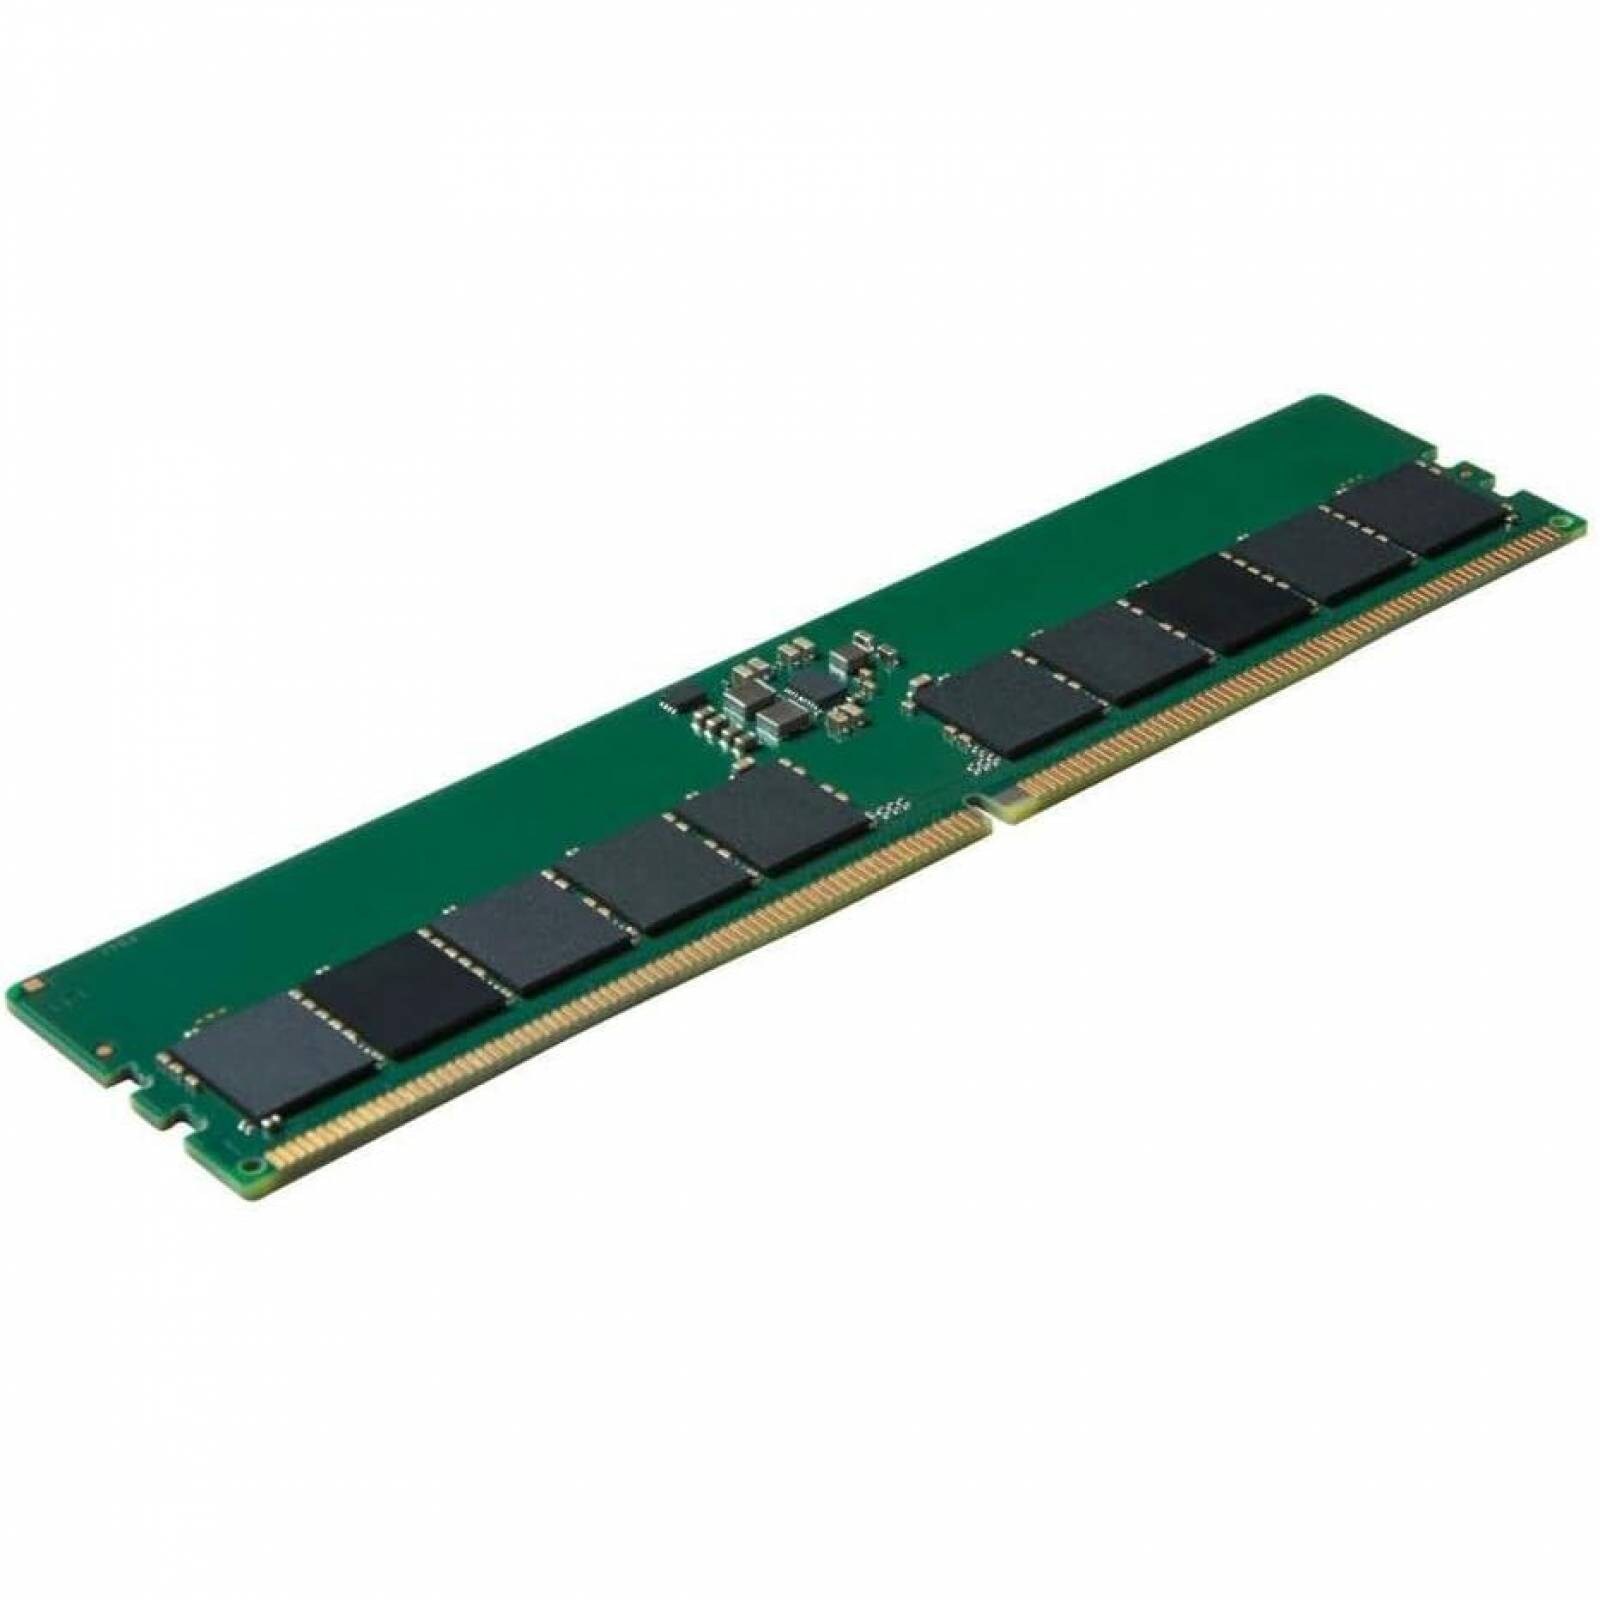 Memoria RAM Kingston KCP432ND8 DDR4, 3200MHz, 16GB, Non-ECC, CL22